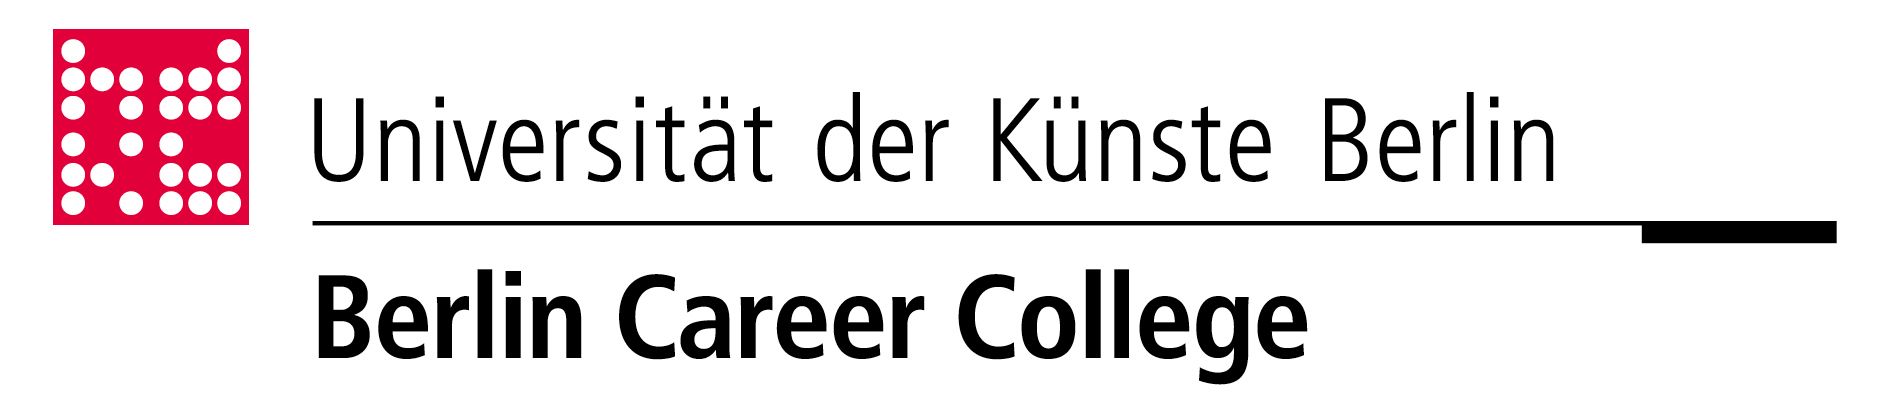 Universität der Künste Berlin, Bild: Berlin Career College.